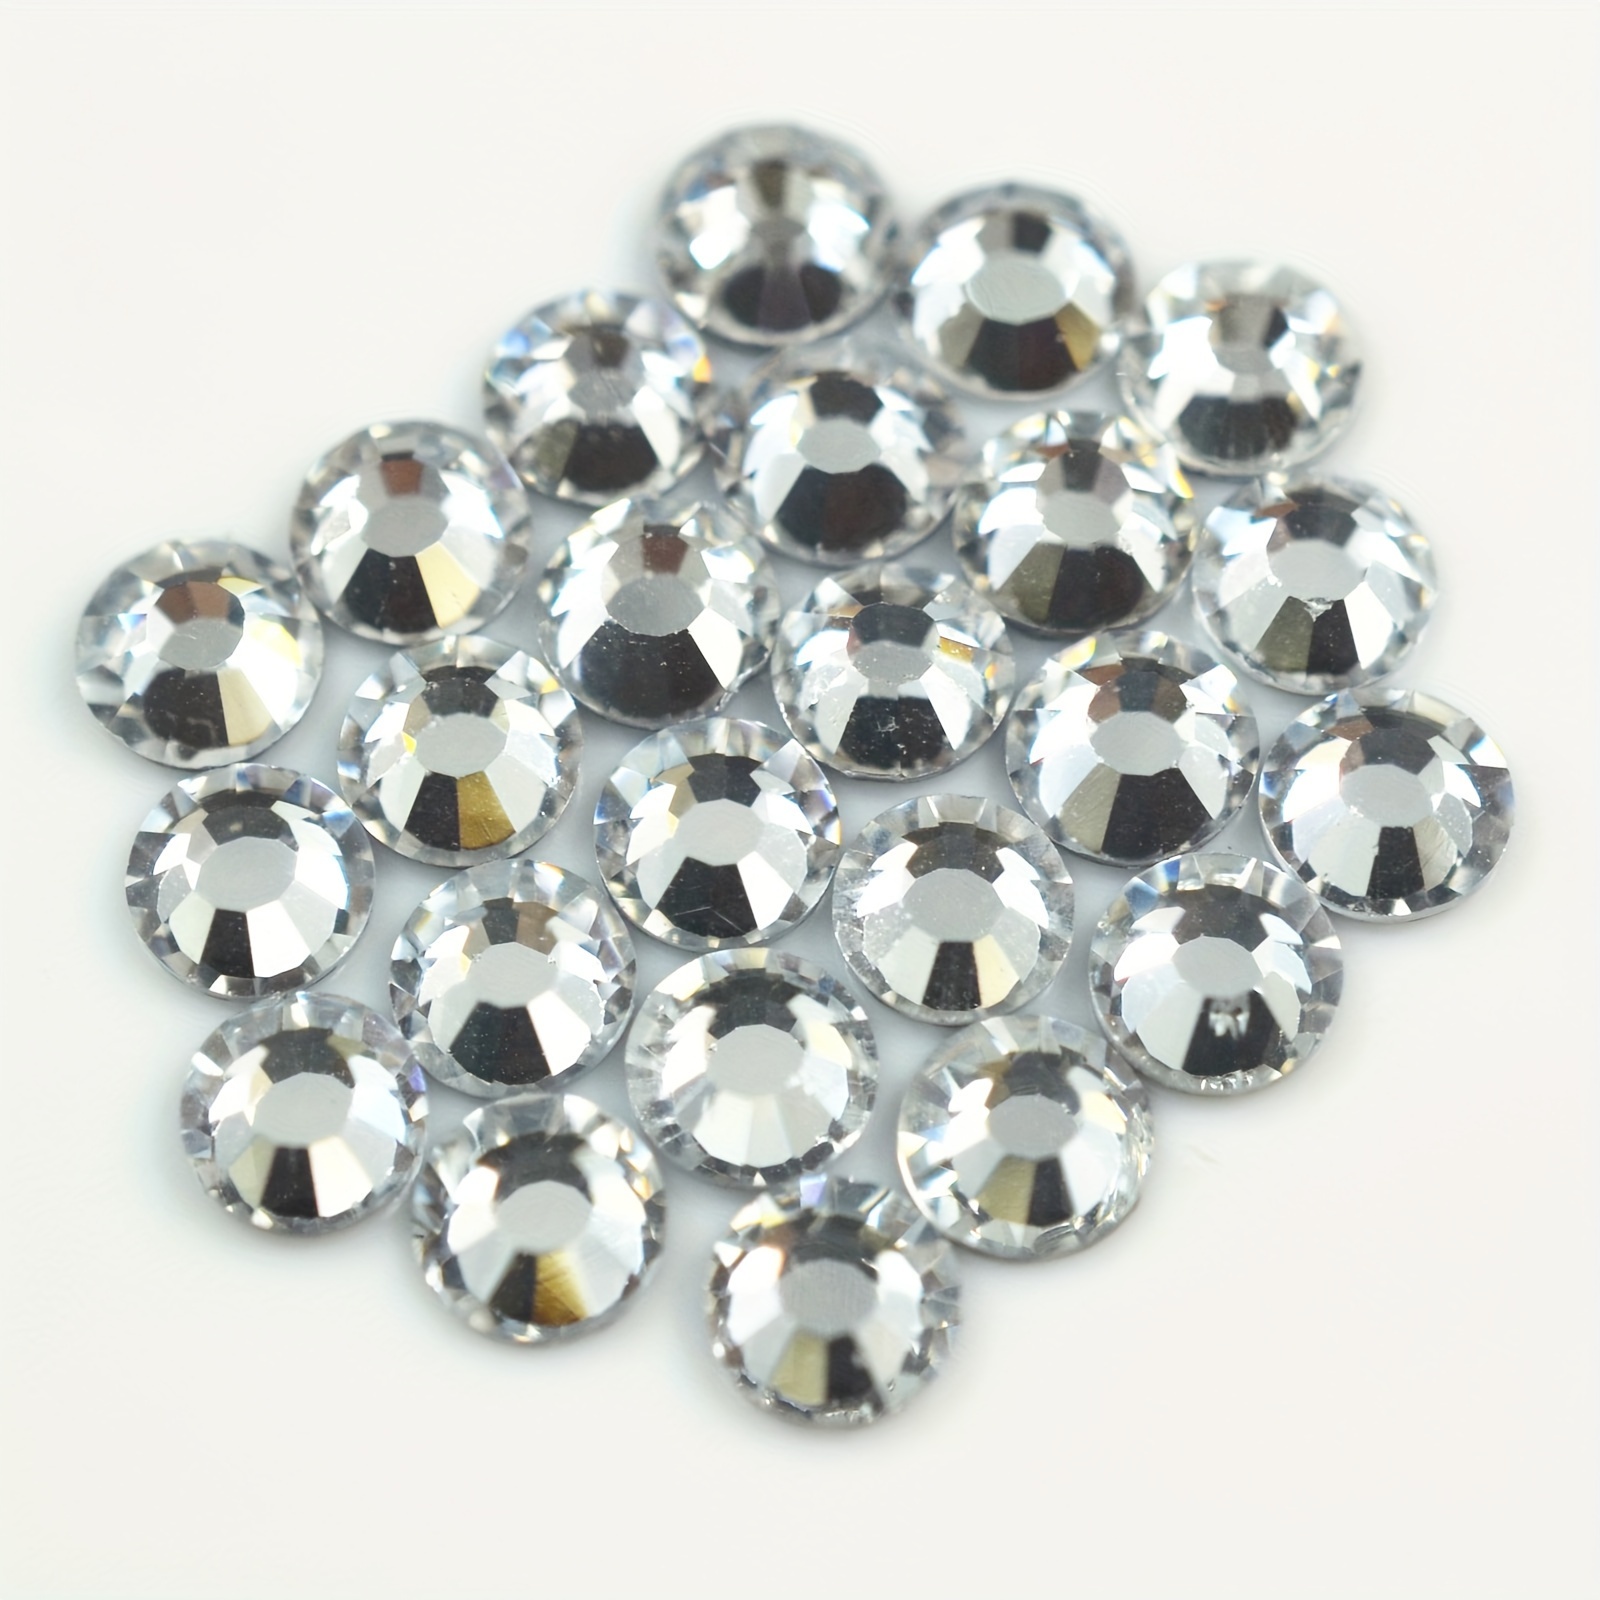 Dowarm Hotfix Crystal Rhinestones, Hot Fix Crystals for Crafts Clothes, Flatback Glass Crystal for Decoration, Round Gems, Mine Silver/Crystal